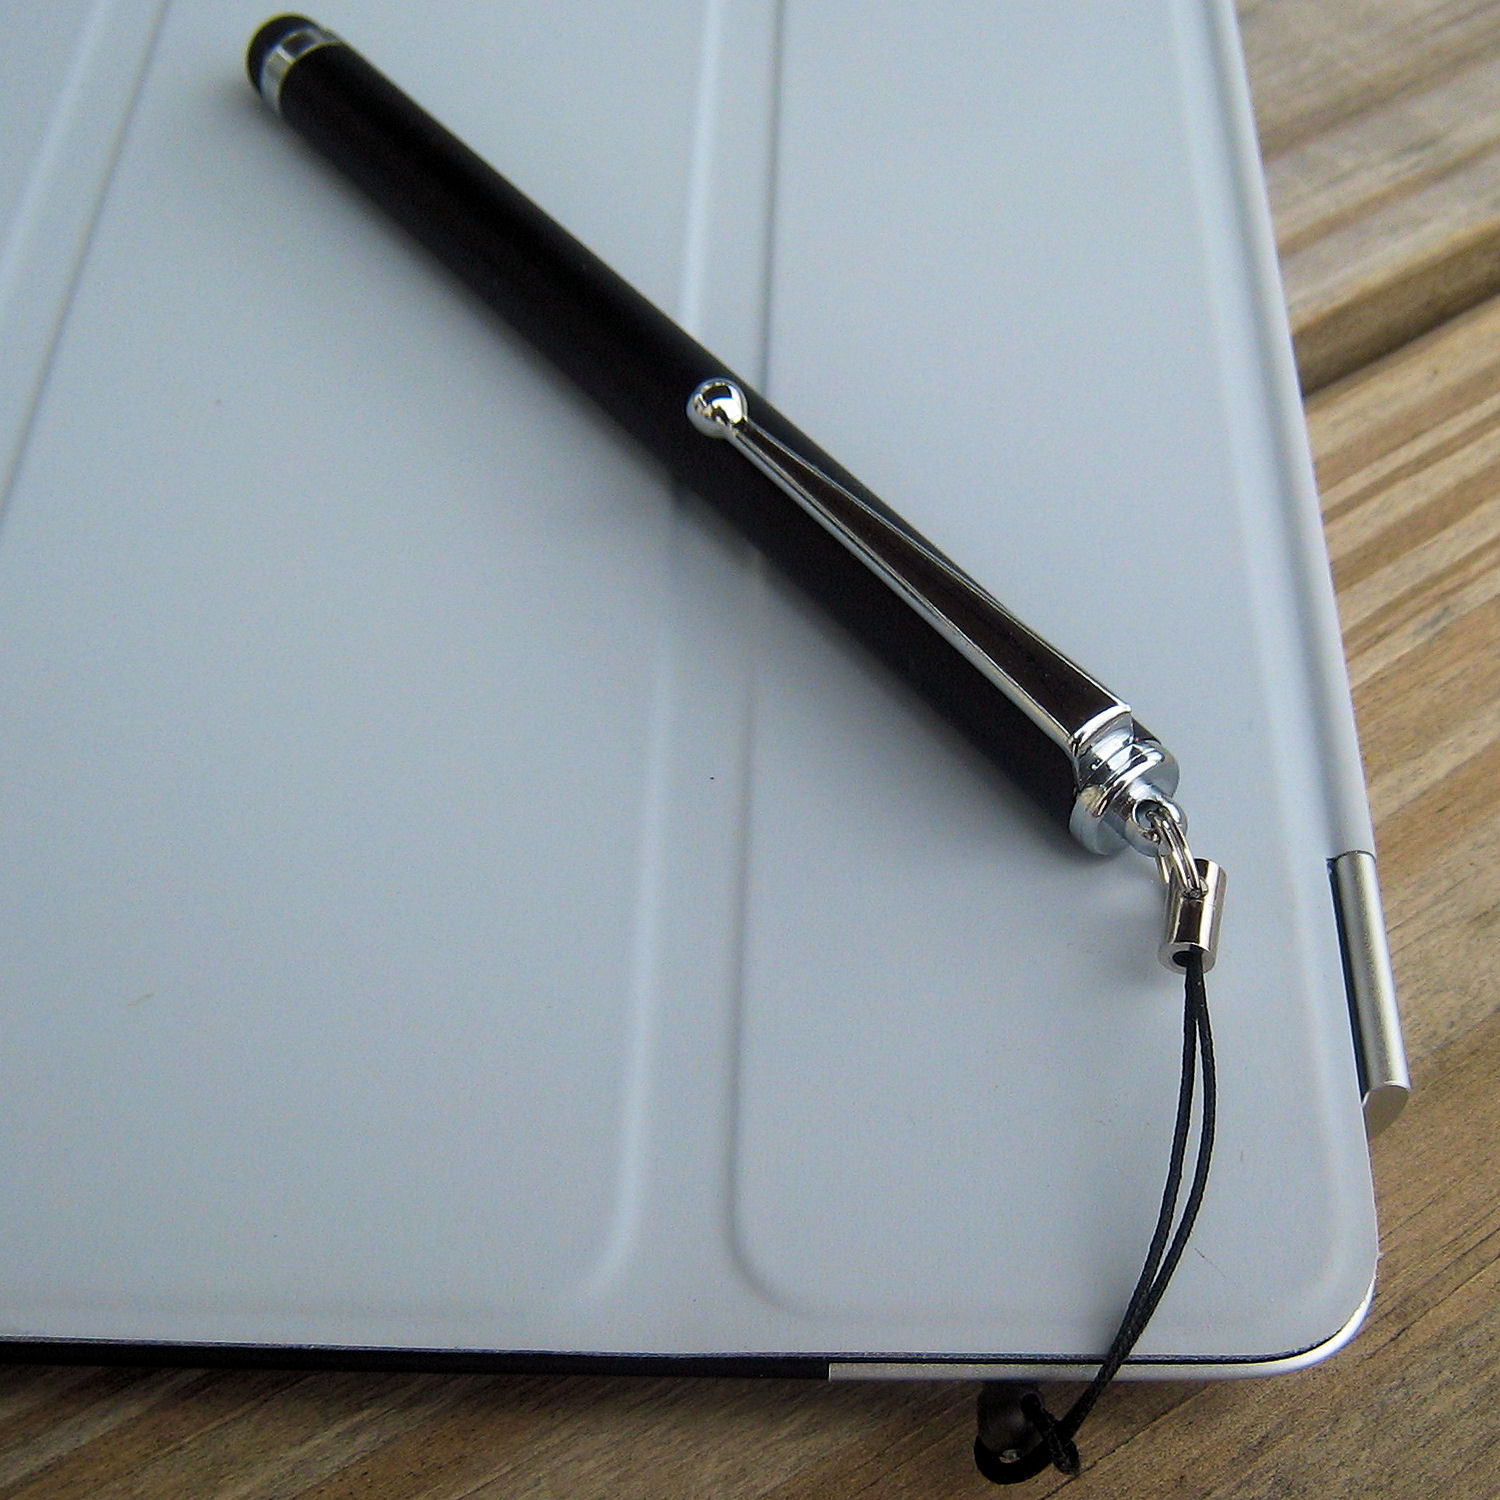 Gomadic Precision Tip Capacitive Stylus Pen designed for the HTC 7 Pro (Black Color) - Lifetime Warranty